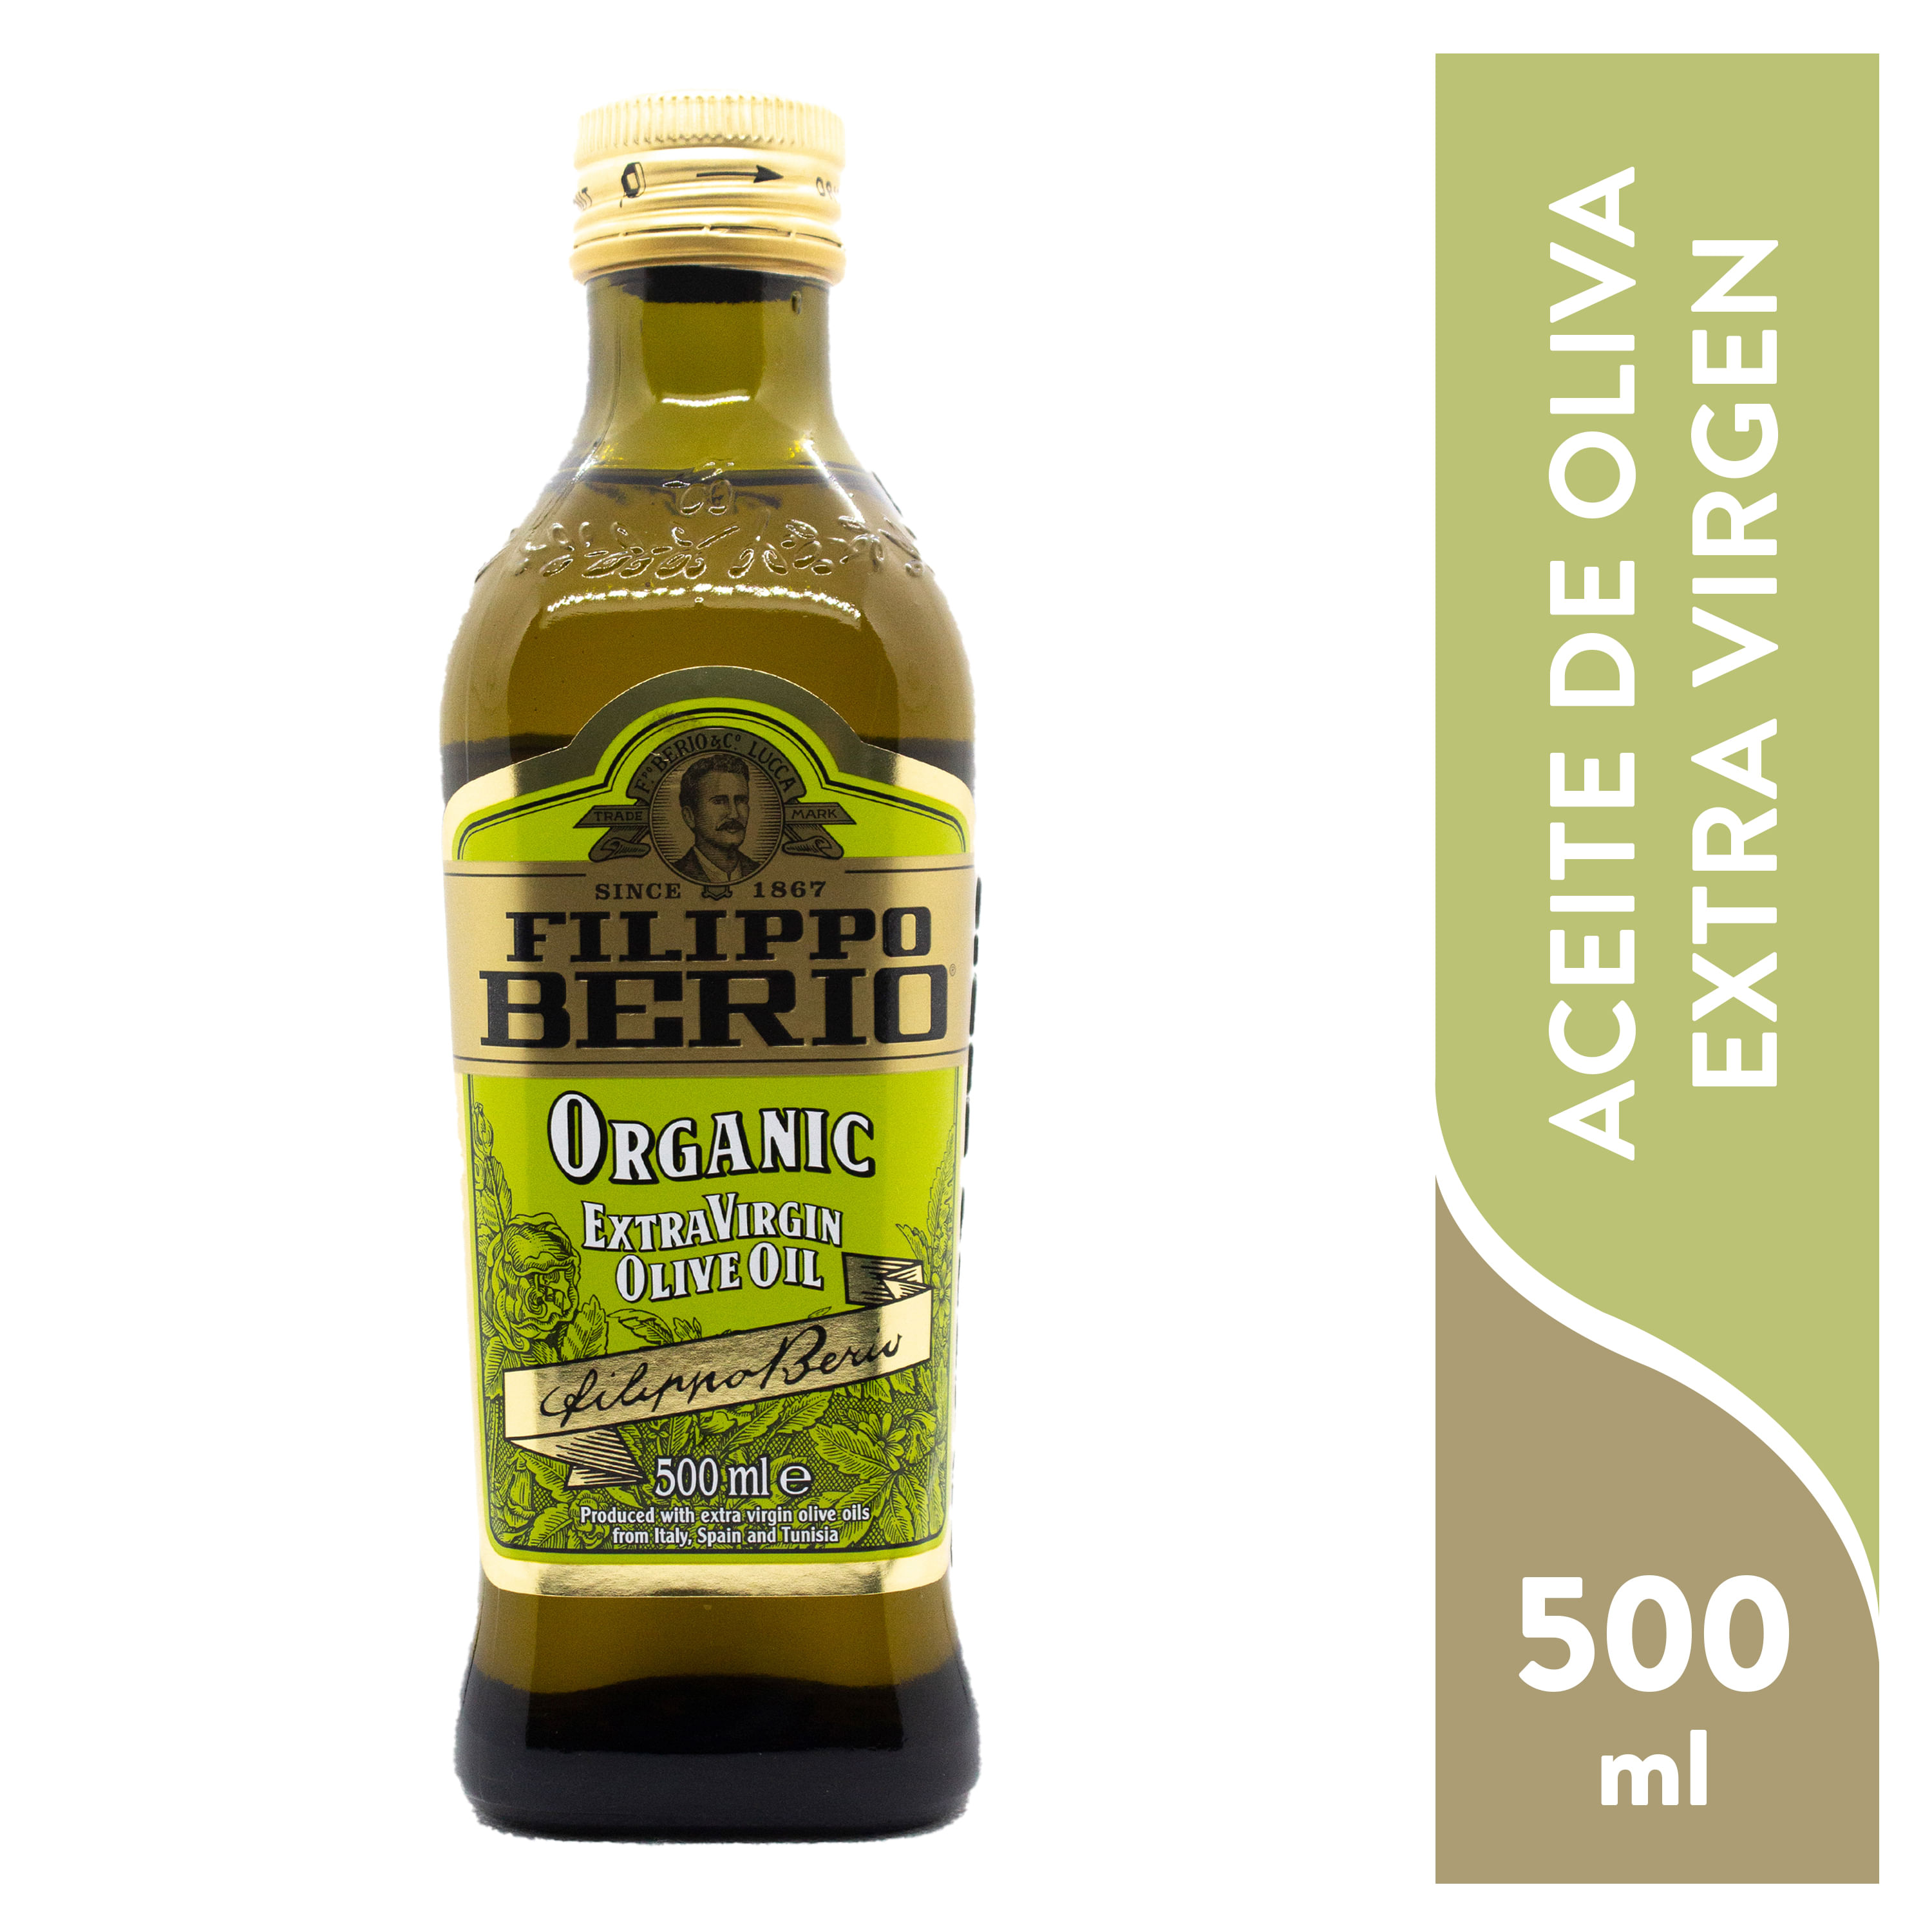 Predilecto Aceite de Oliva 4 oz - Olive Oil (Pack of 24)